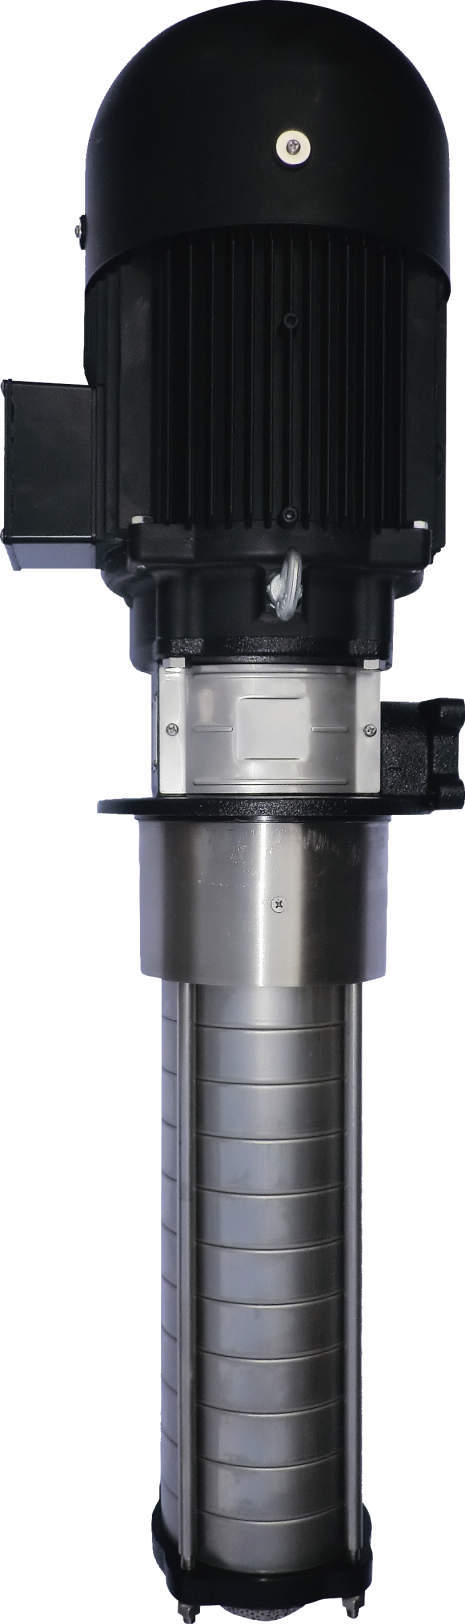 テラル(株) 冷却泵小流量中扬程多段浸泡型VKB-H型